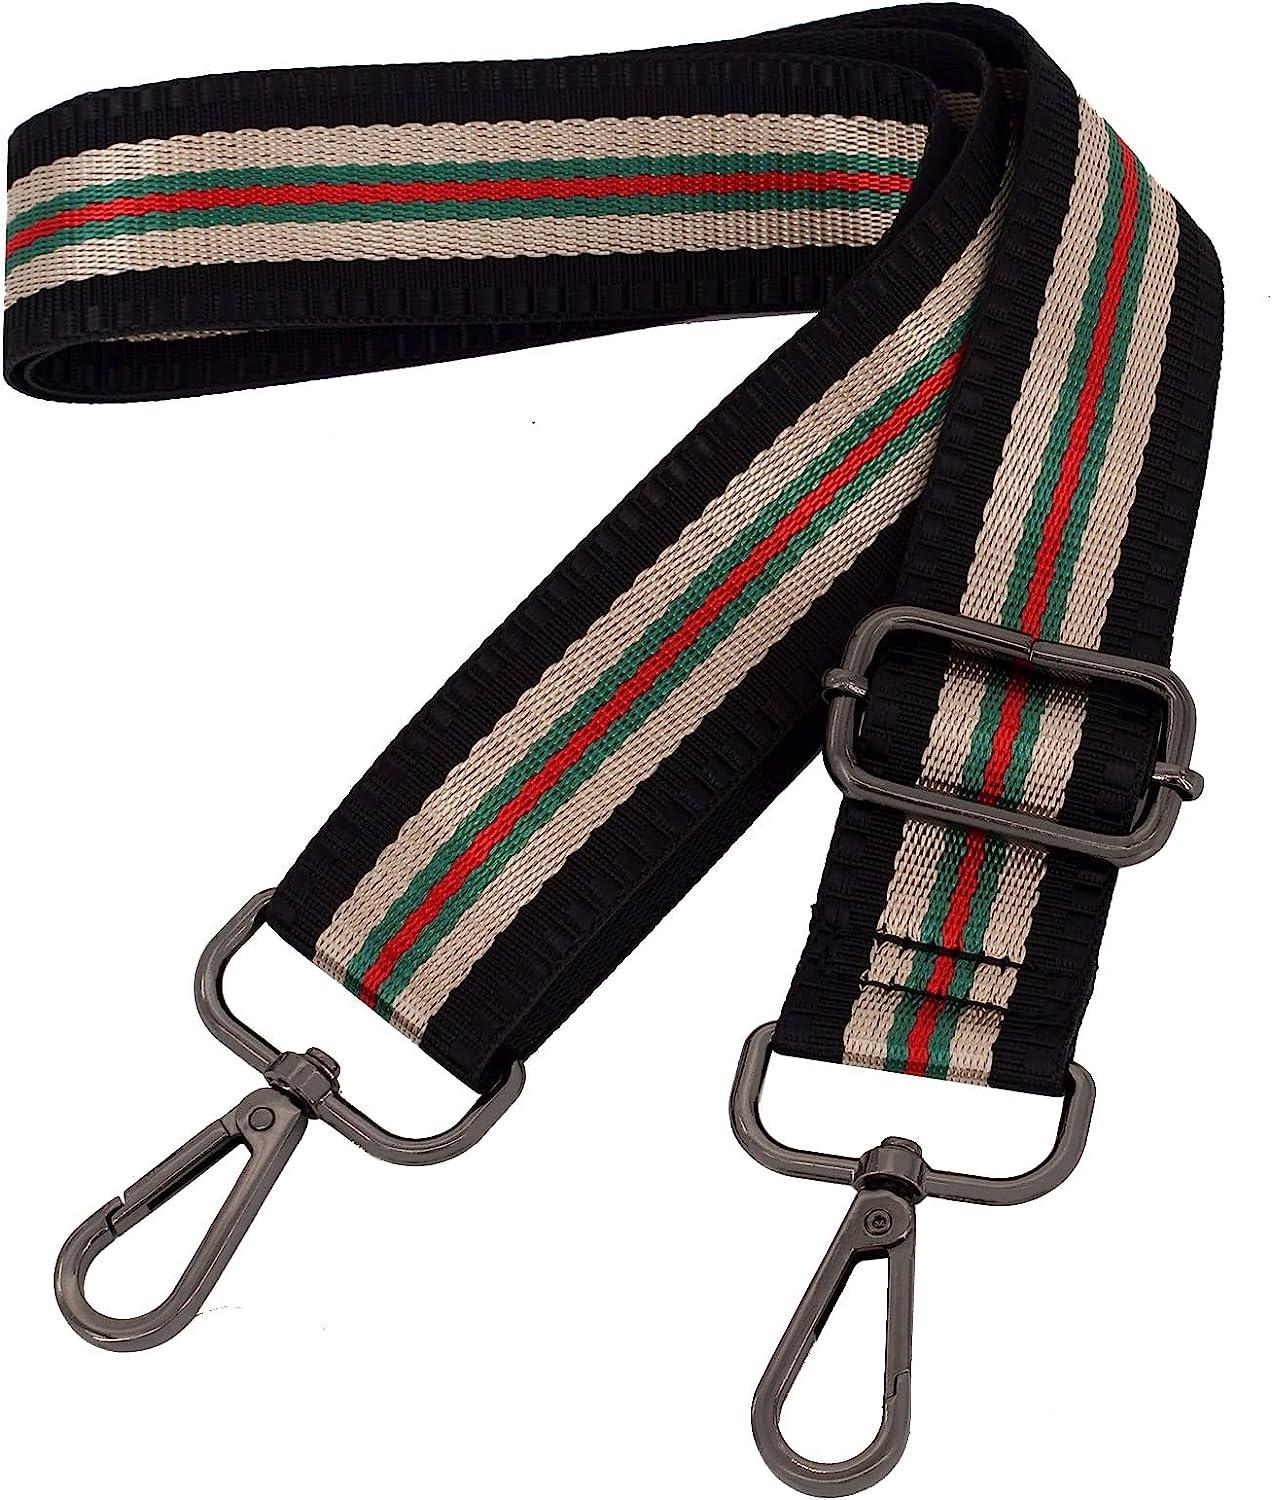 Purse Strap Replacement Crossbody Wide Shoulder Strap Adjustable Canvas Straps Handbag Strap Replacement Belts